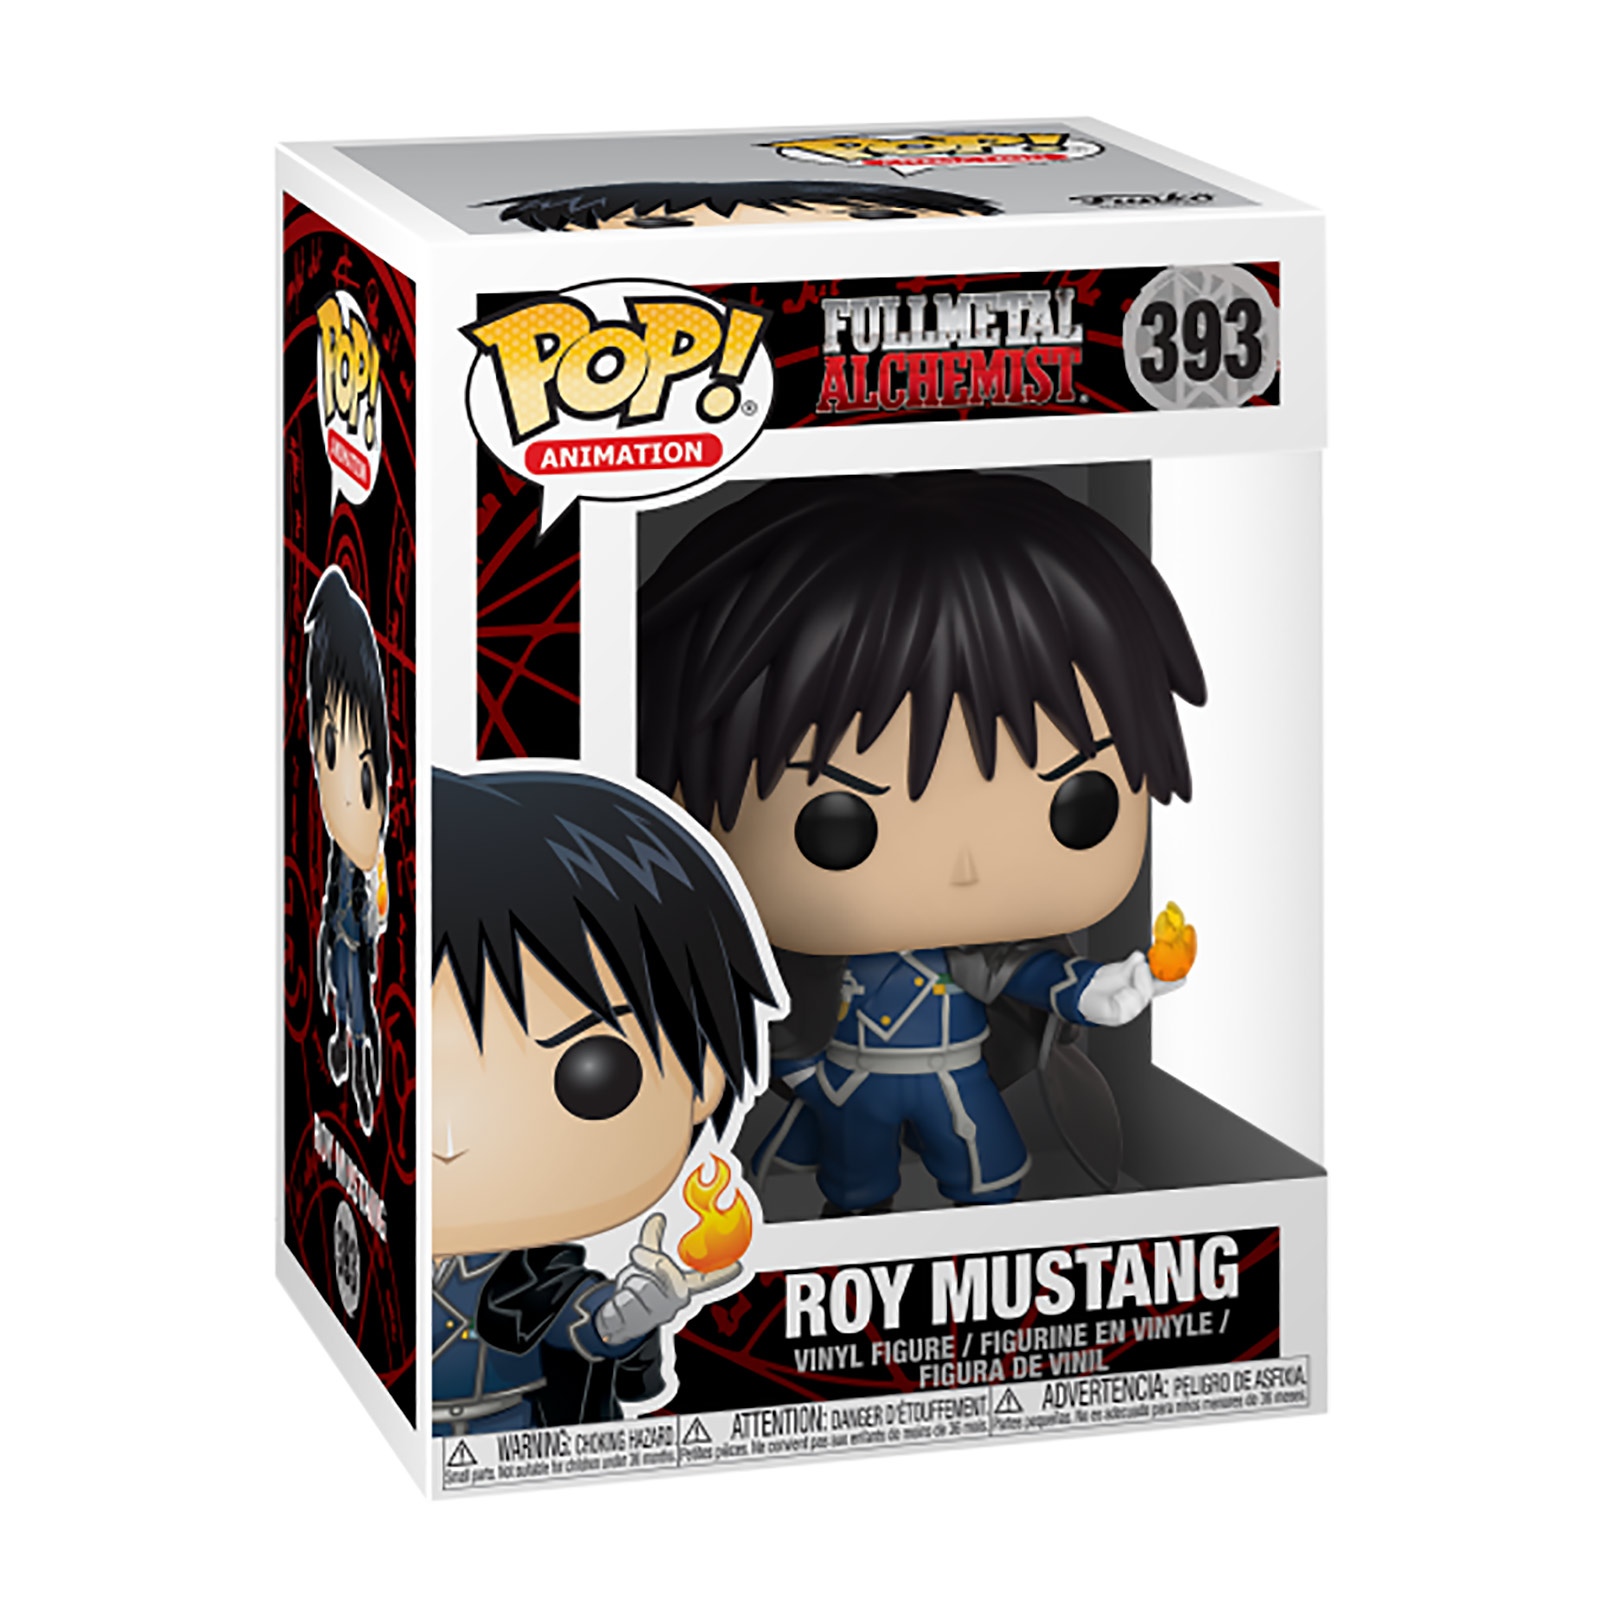 Fullmetal Alchemist - Figurine Funko Pop de Roy Mustang